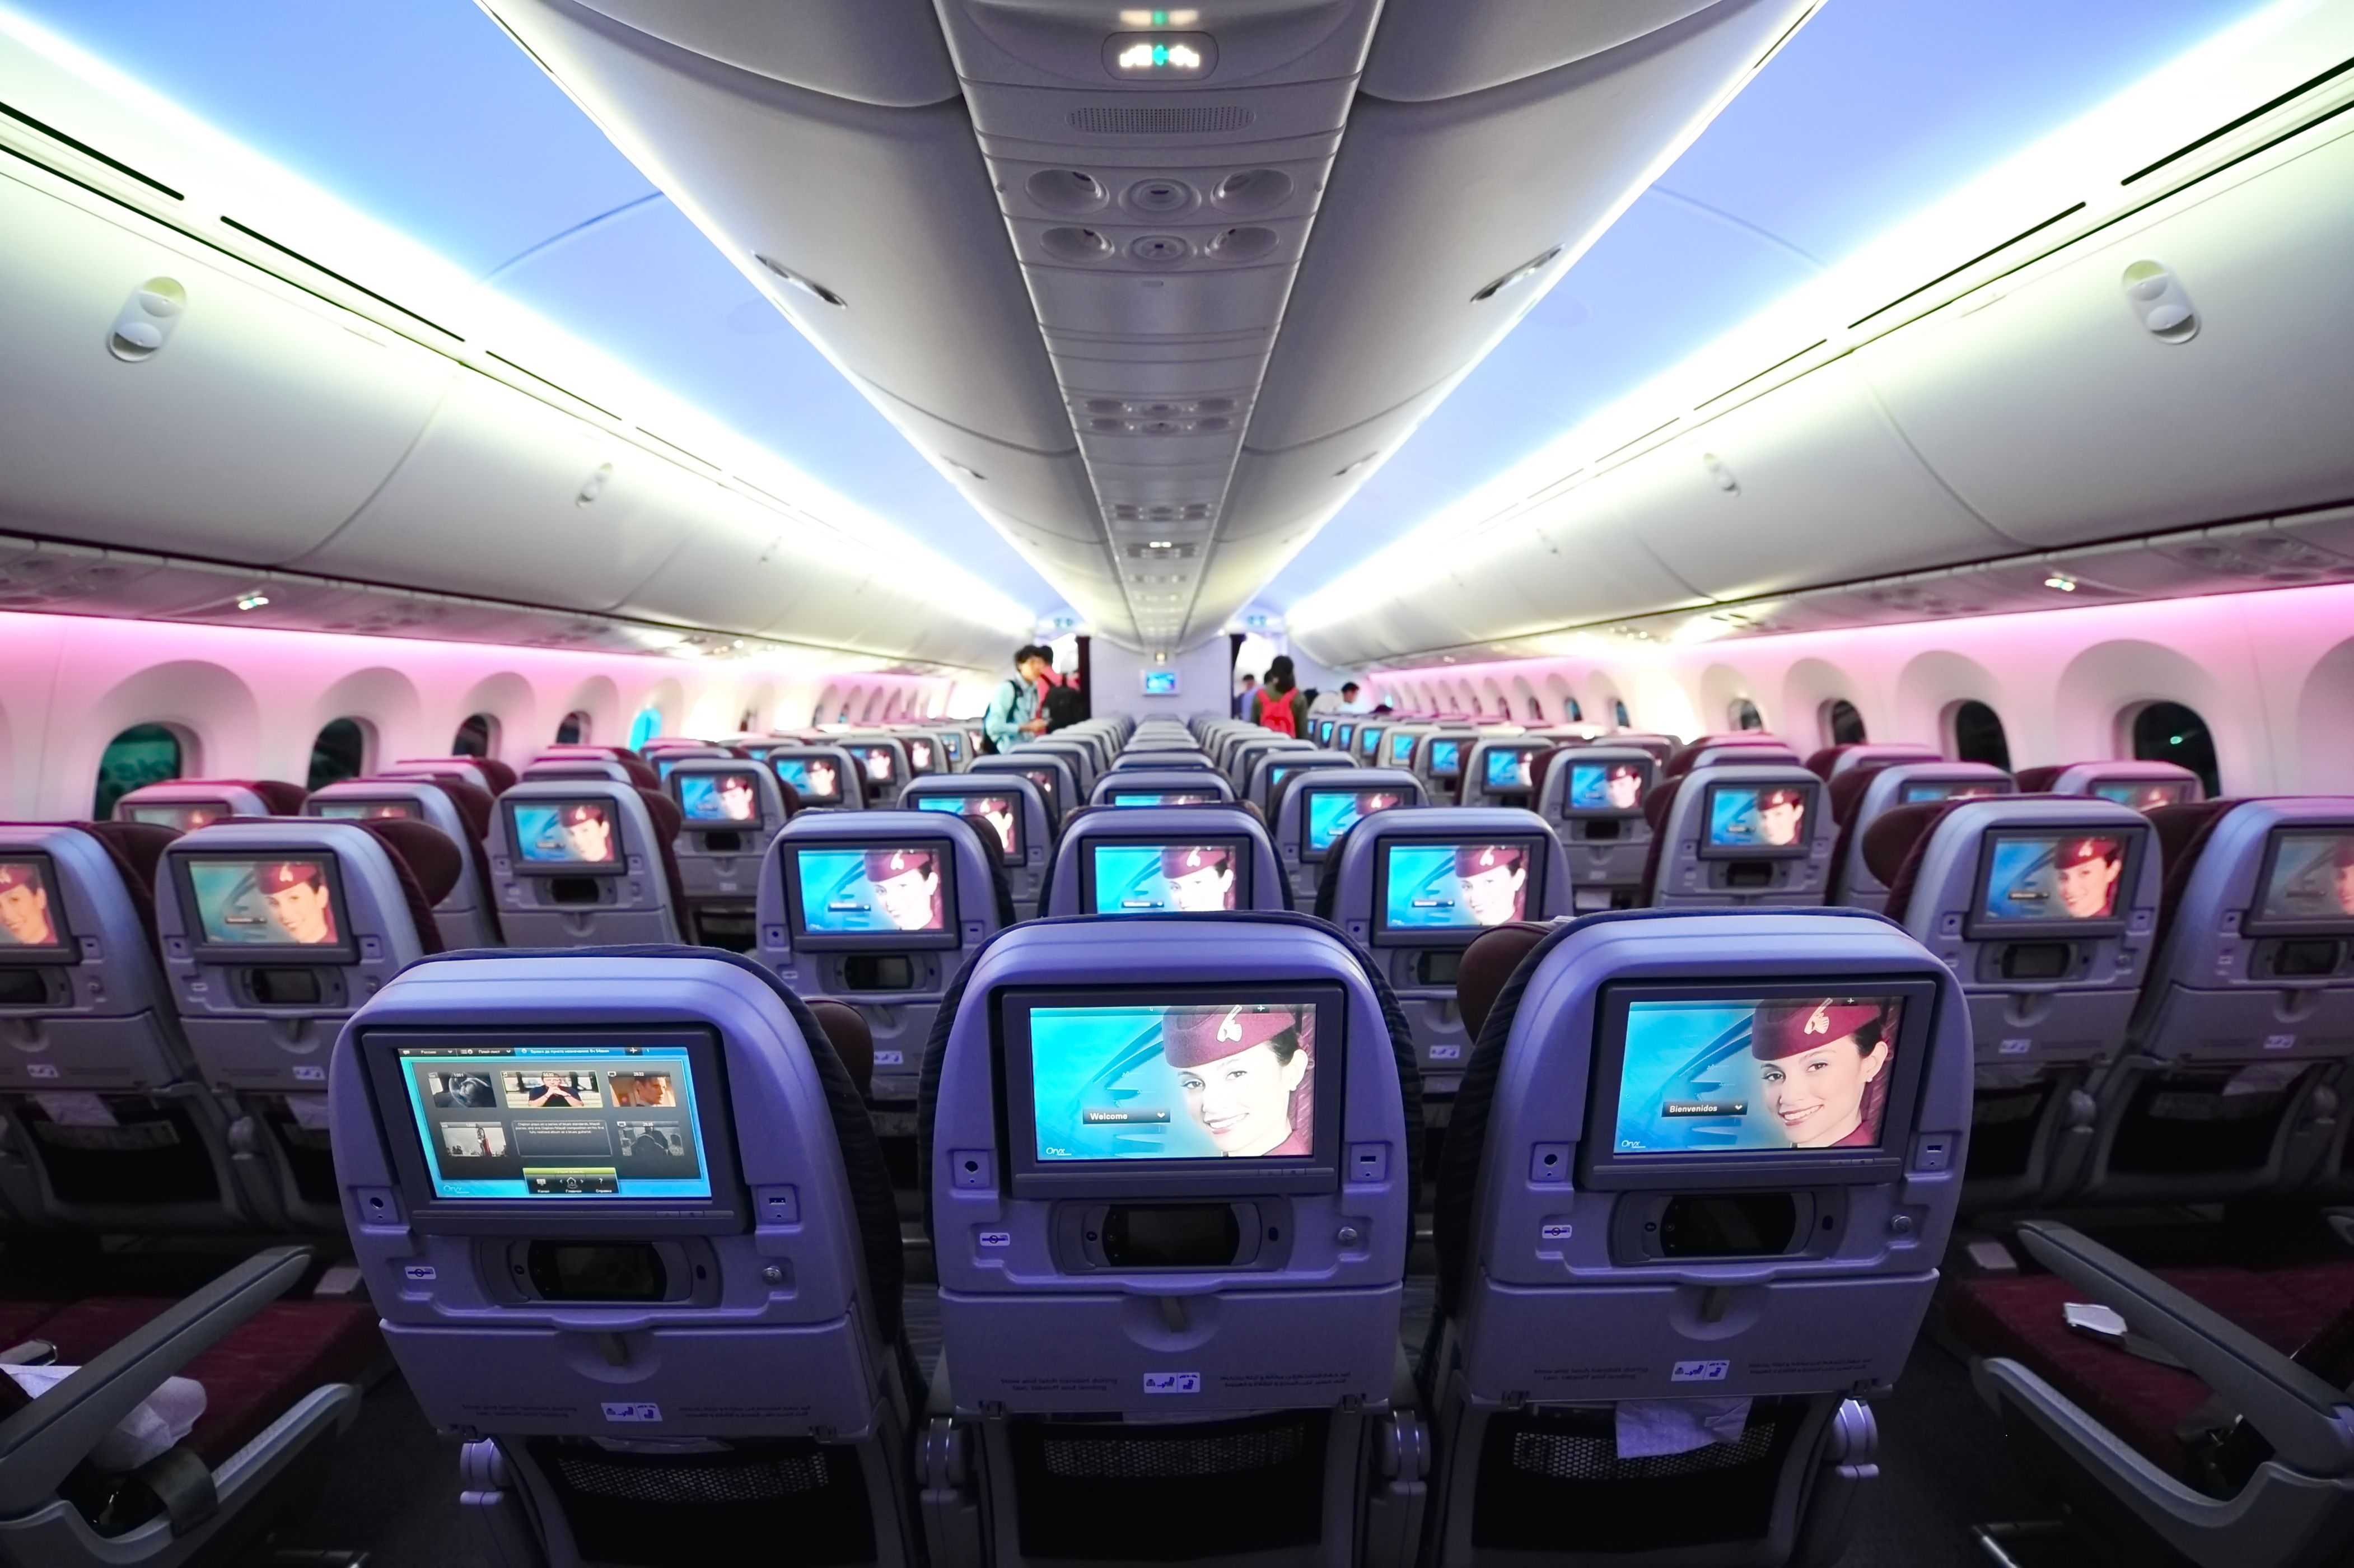 Inside Qatar Airways economy cabin. 